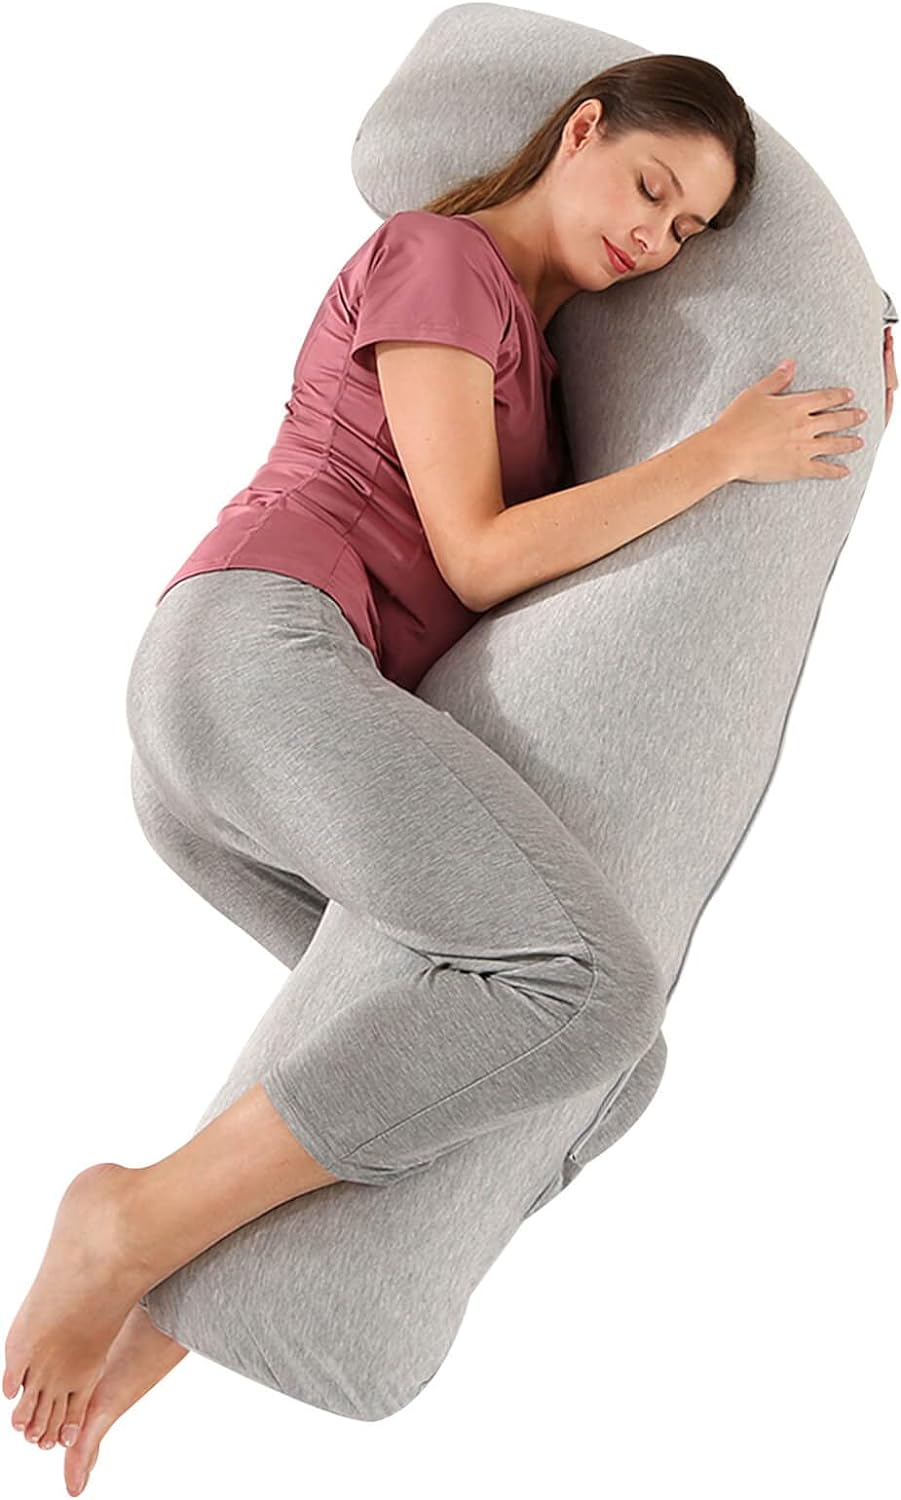 SHANNA Full Body Maternity Pillow